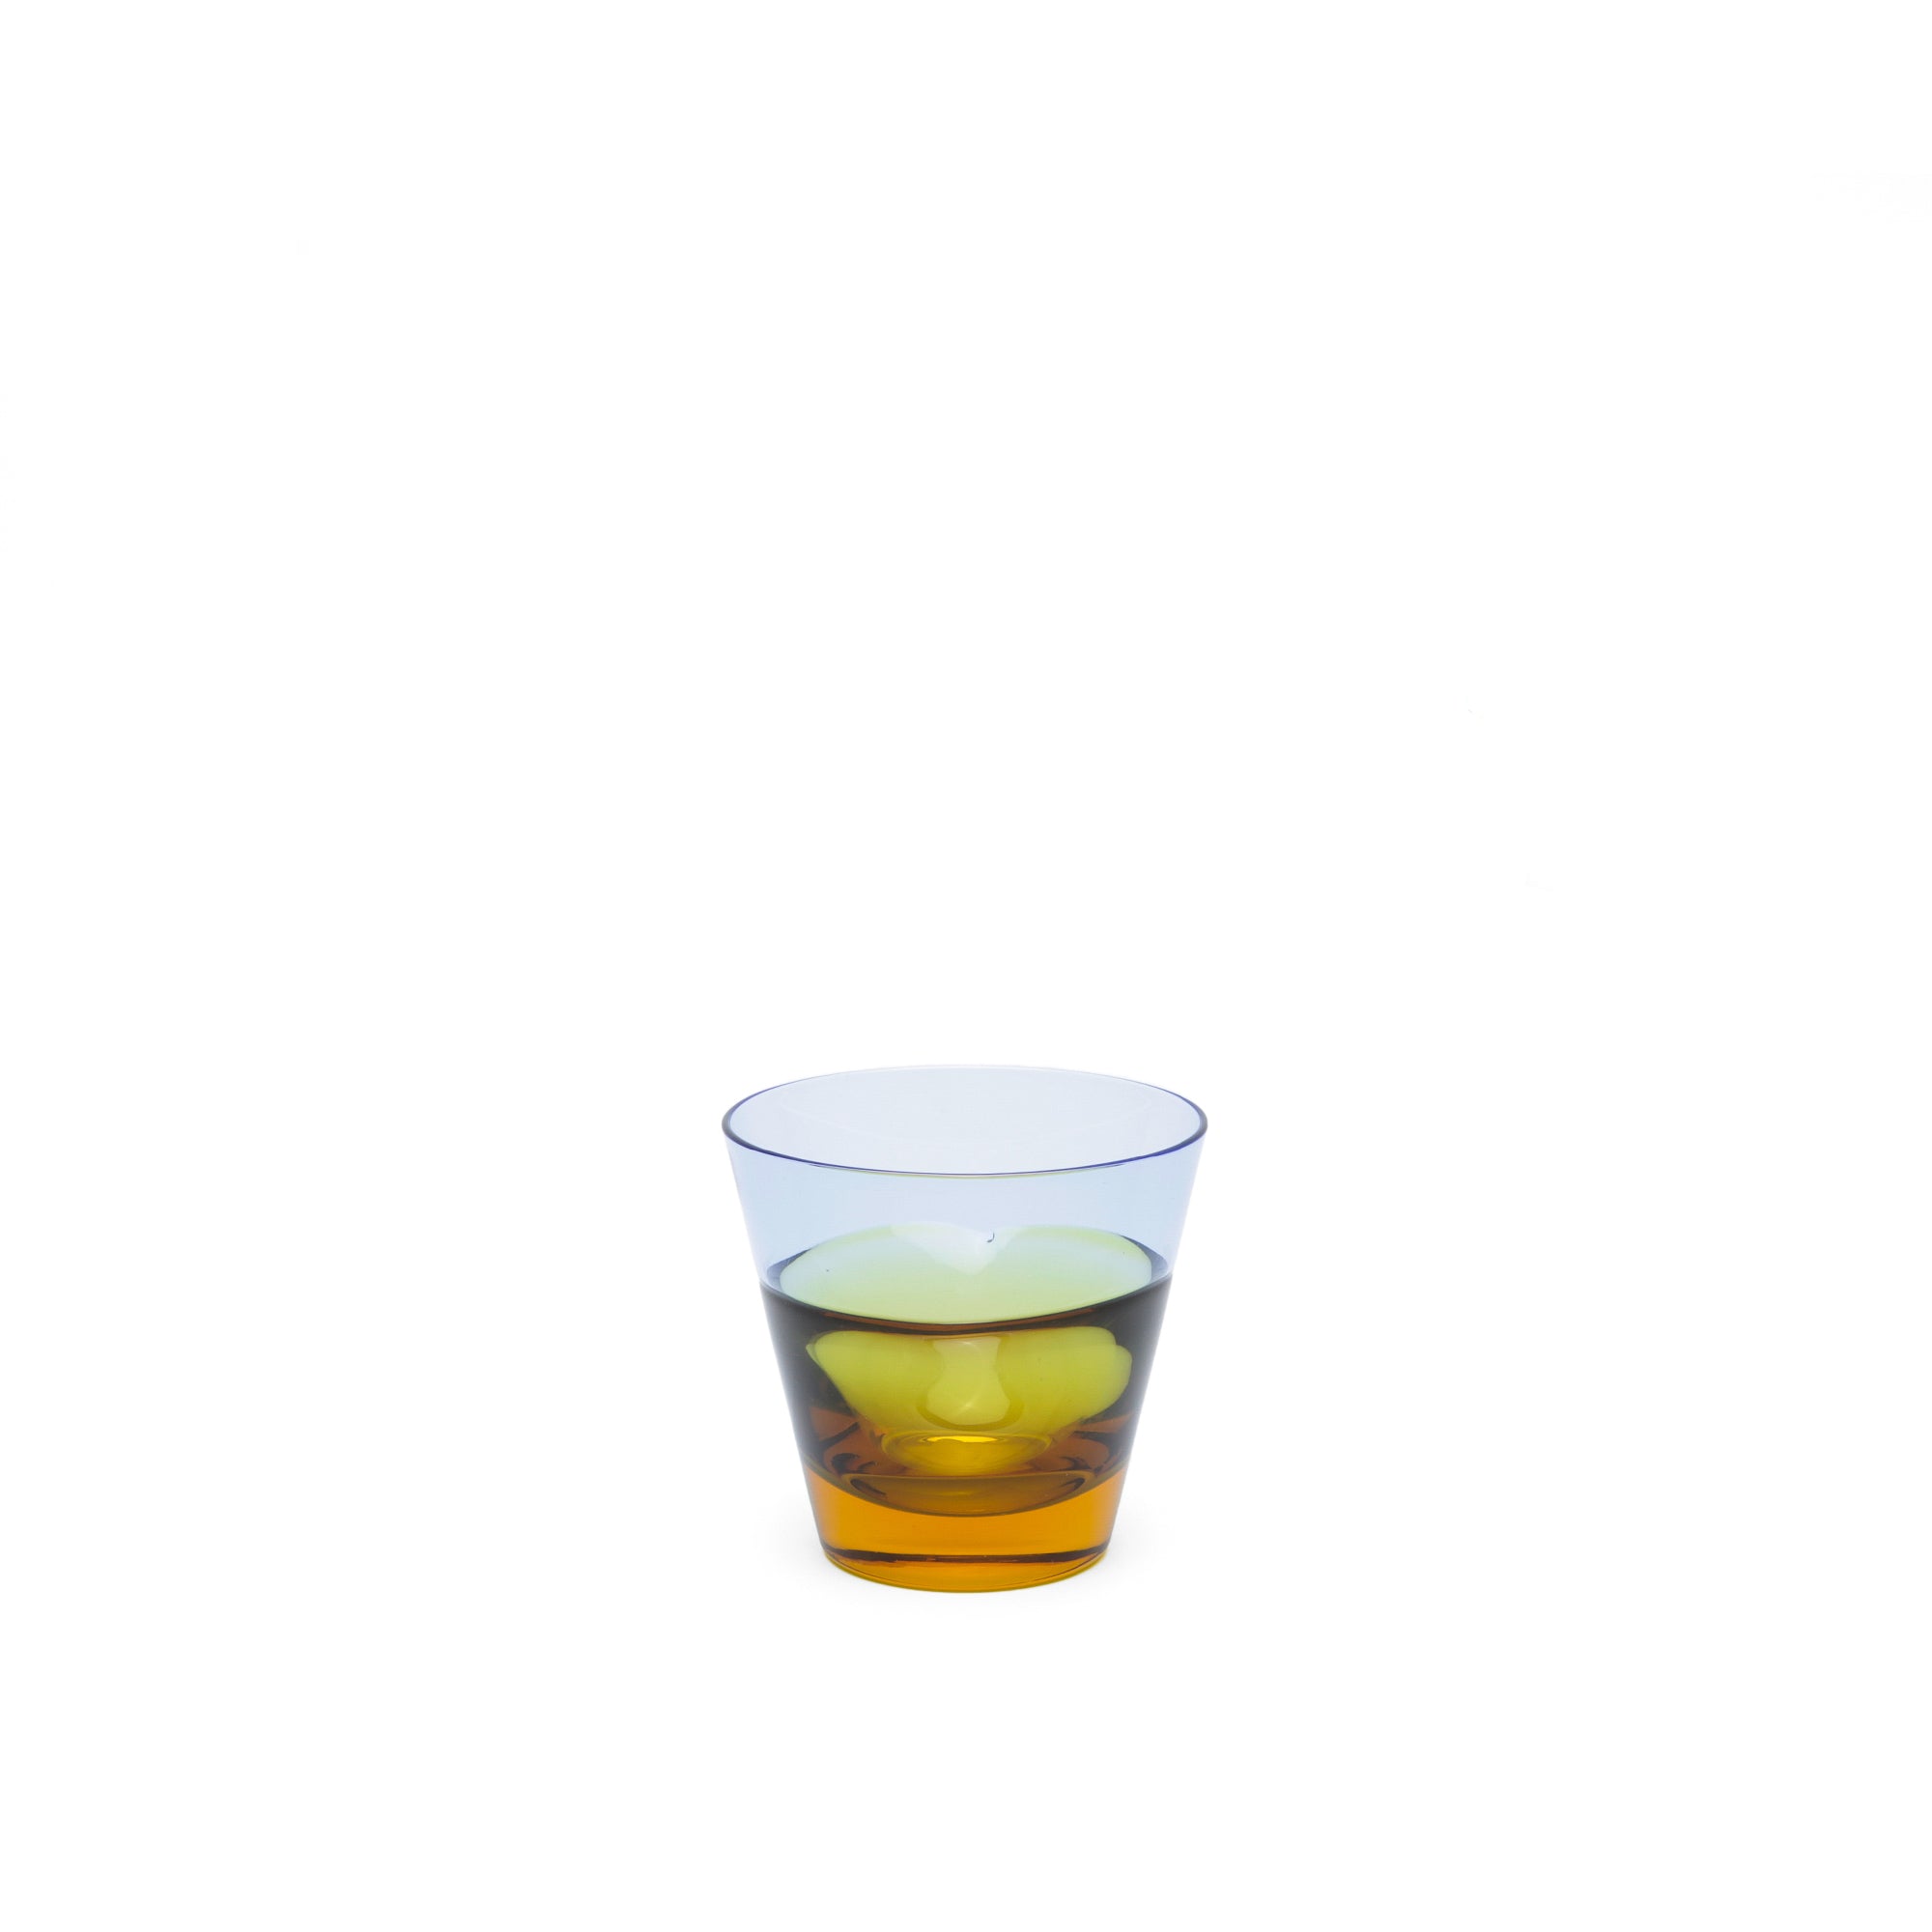 DUO Tone - Sake Amber Glass